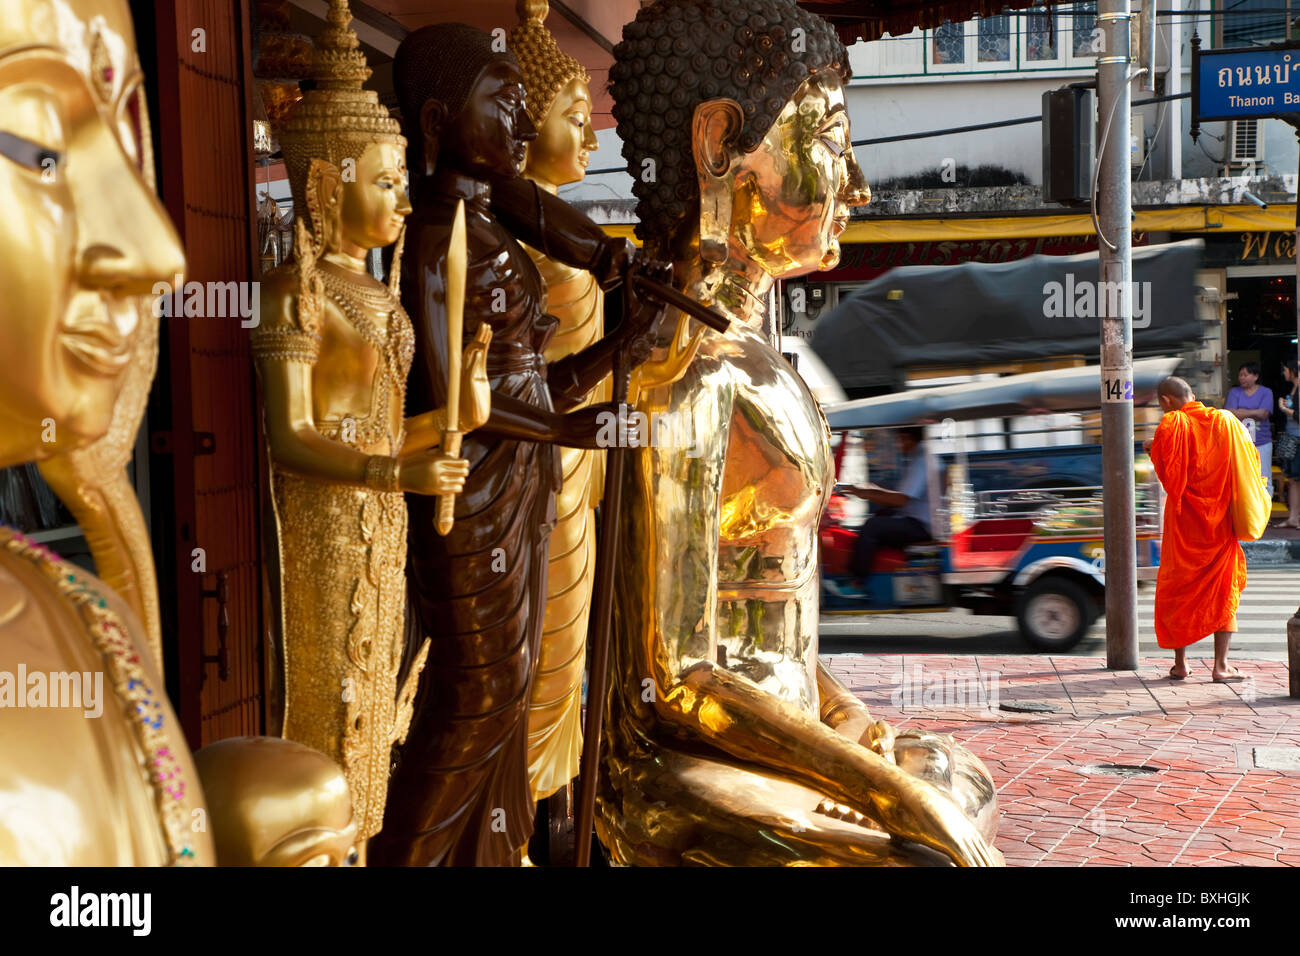 Les statues de bouddha, les moines et les Tuk Tuk, scène de rue, Bangkok, Thaïlande Banque D'Images